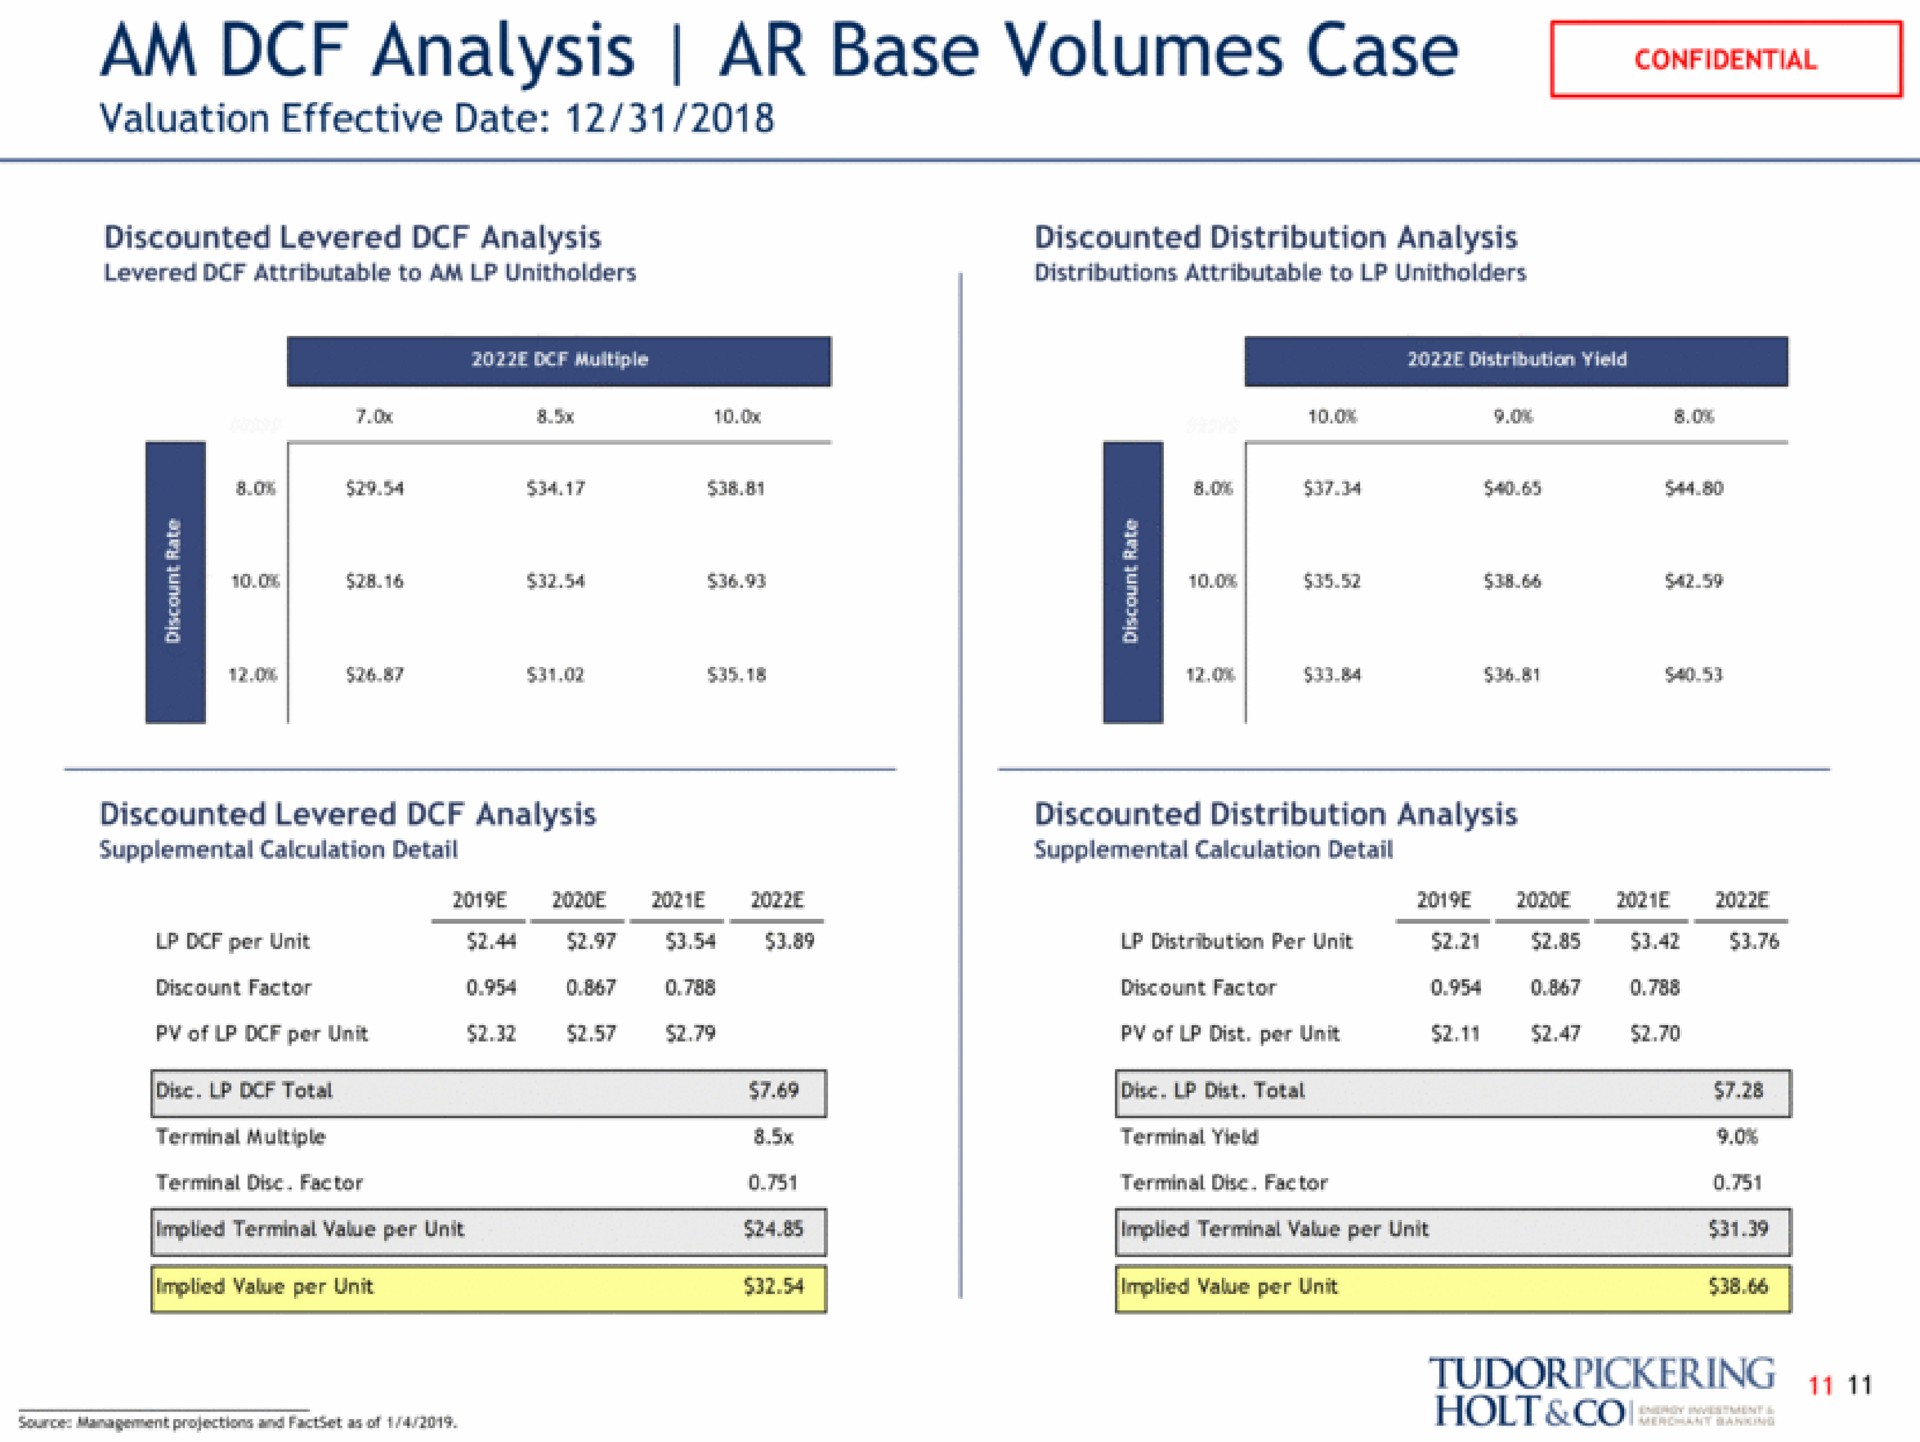 am analysis base volumes case holt | Tudor, Pickering, Holt & Co